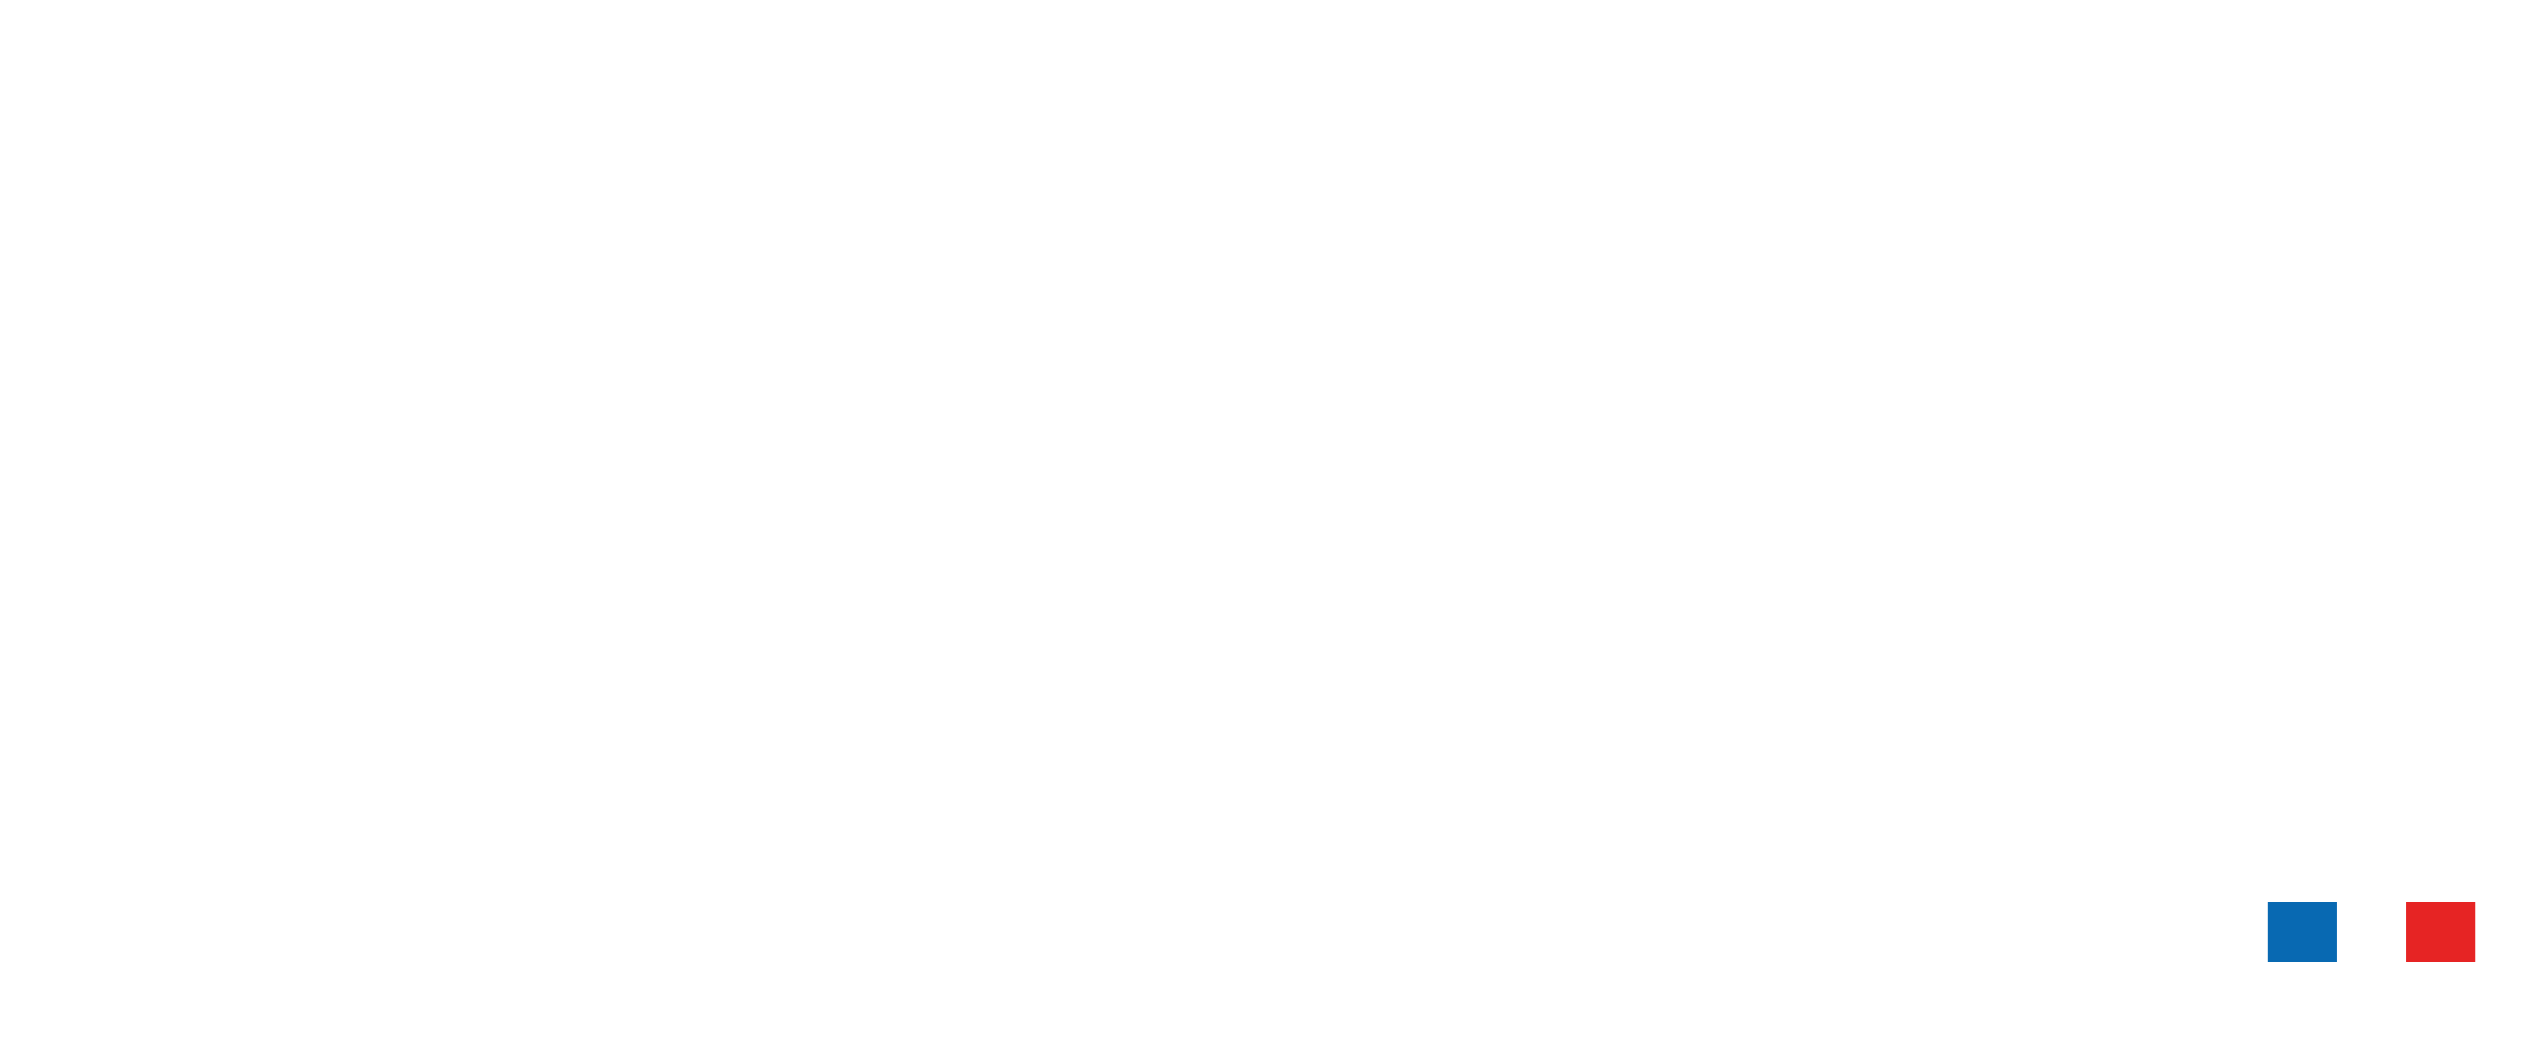 Logo Poterie de Naurouze